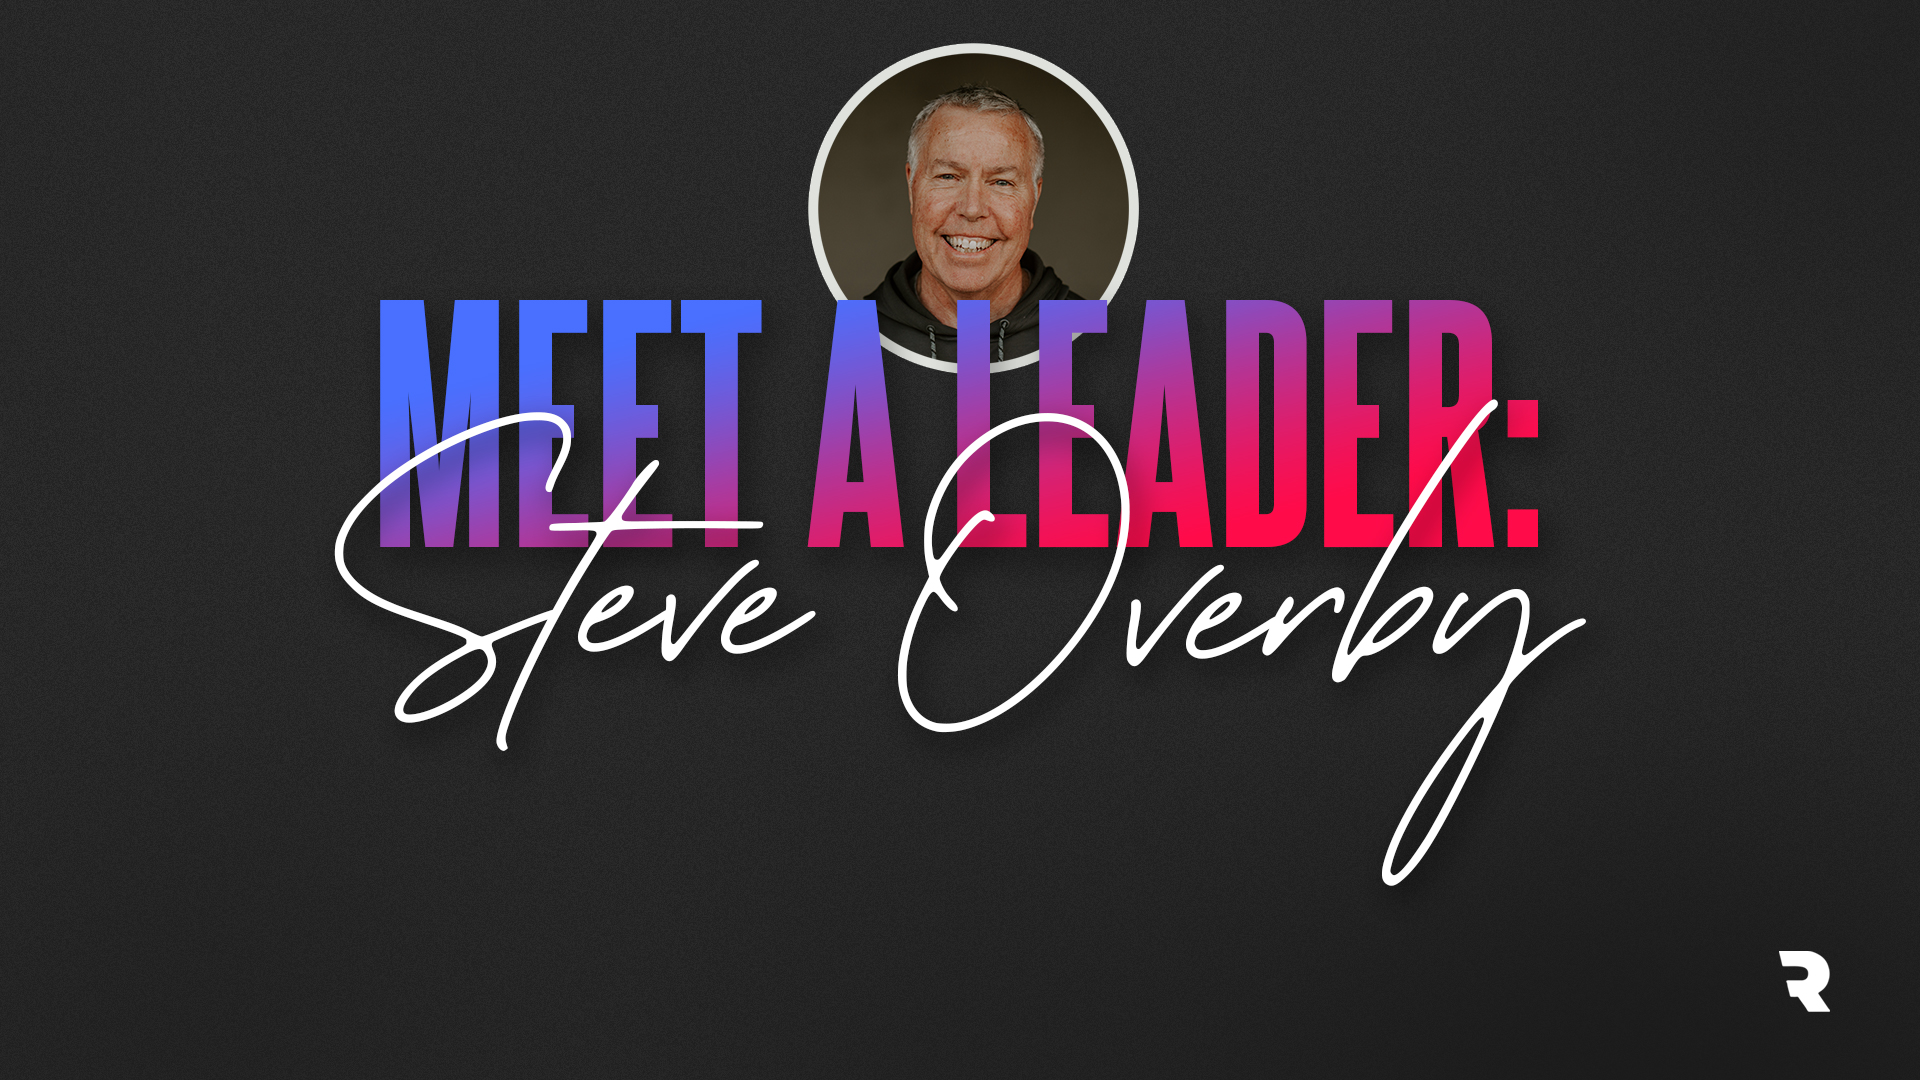 Meet a Leader: Steve Overby